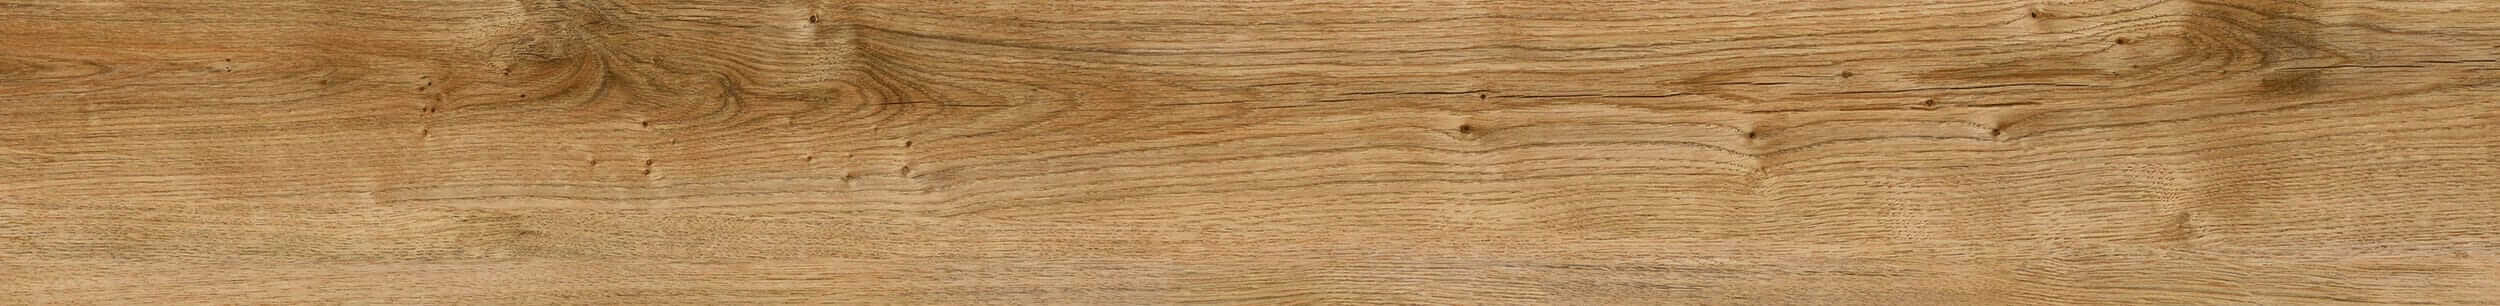 vinyl-wood-flooring